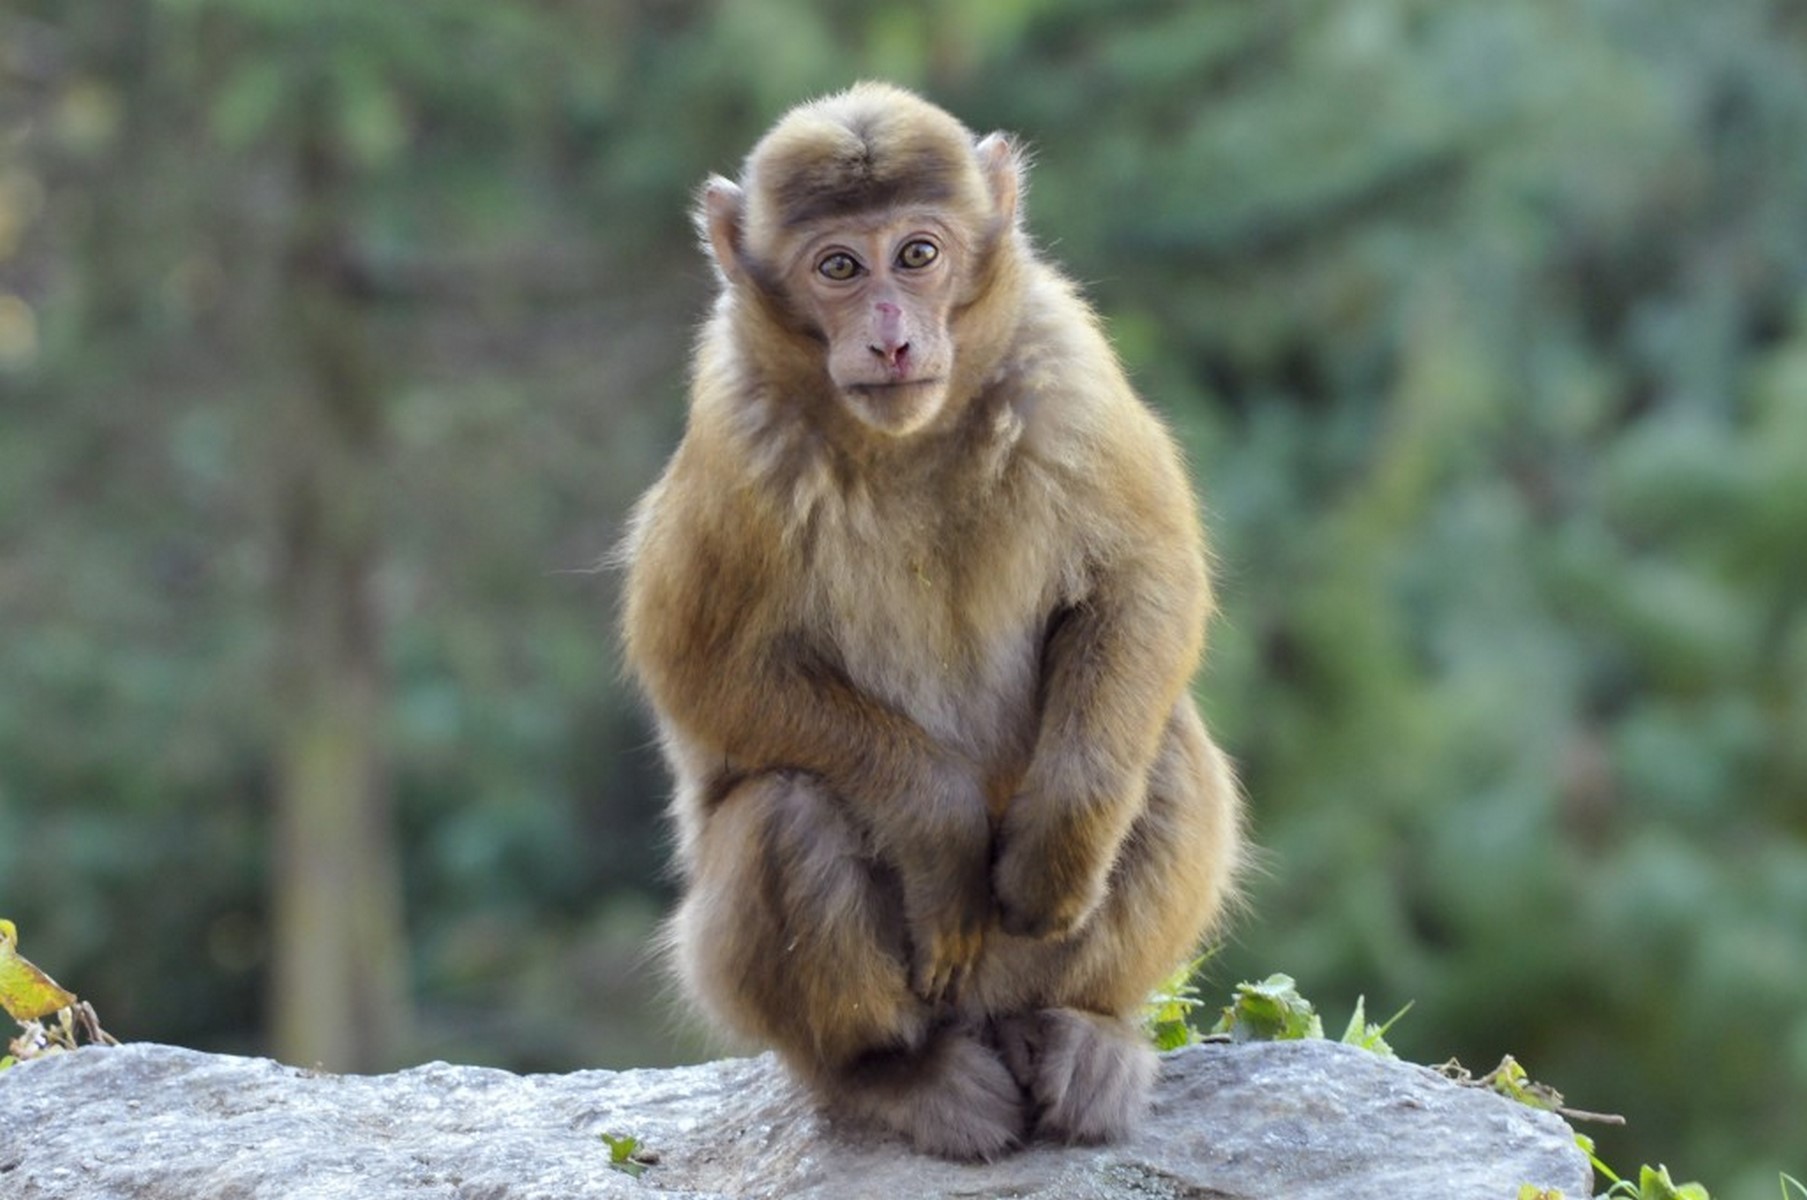 Assam macaque